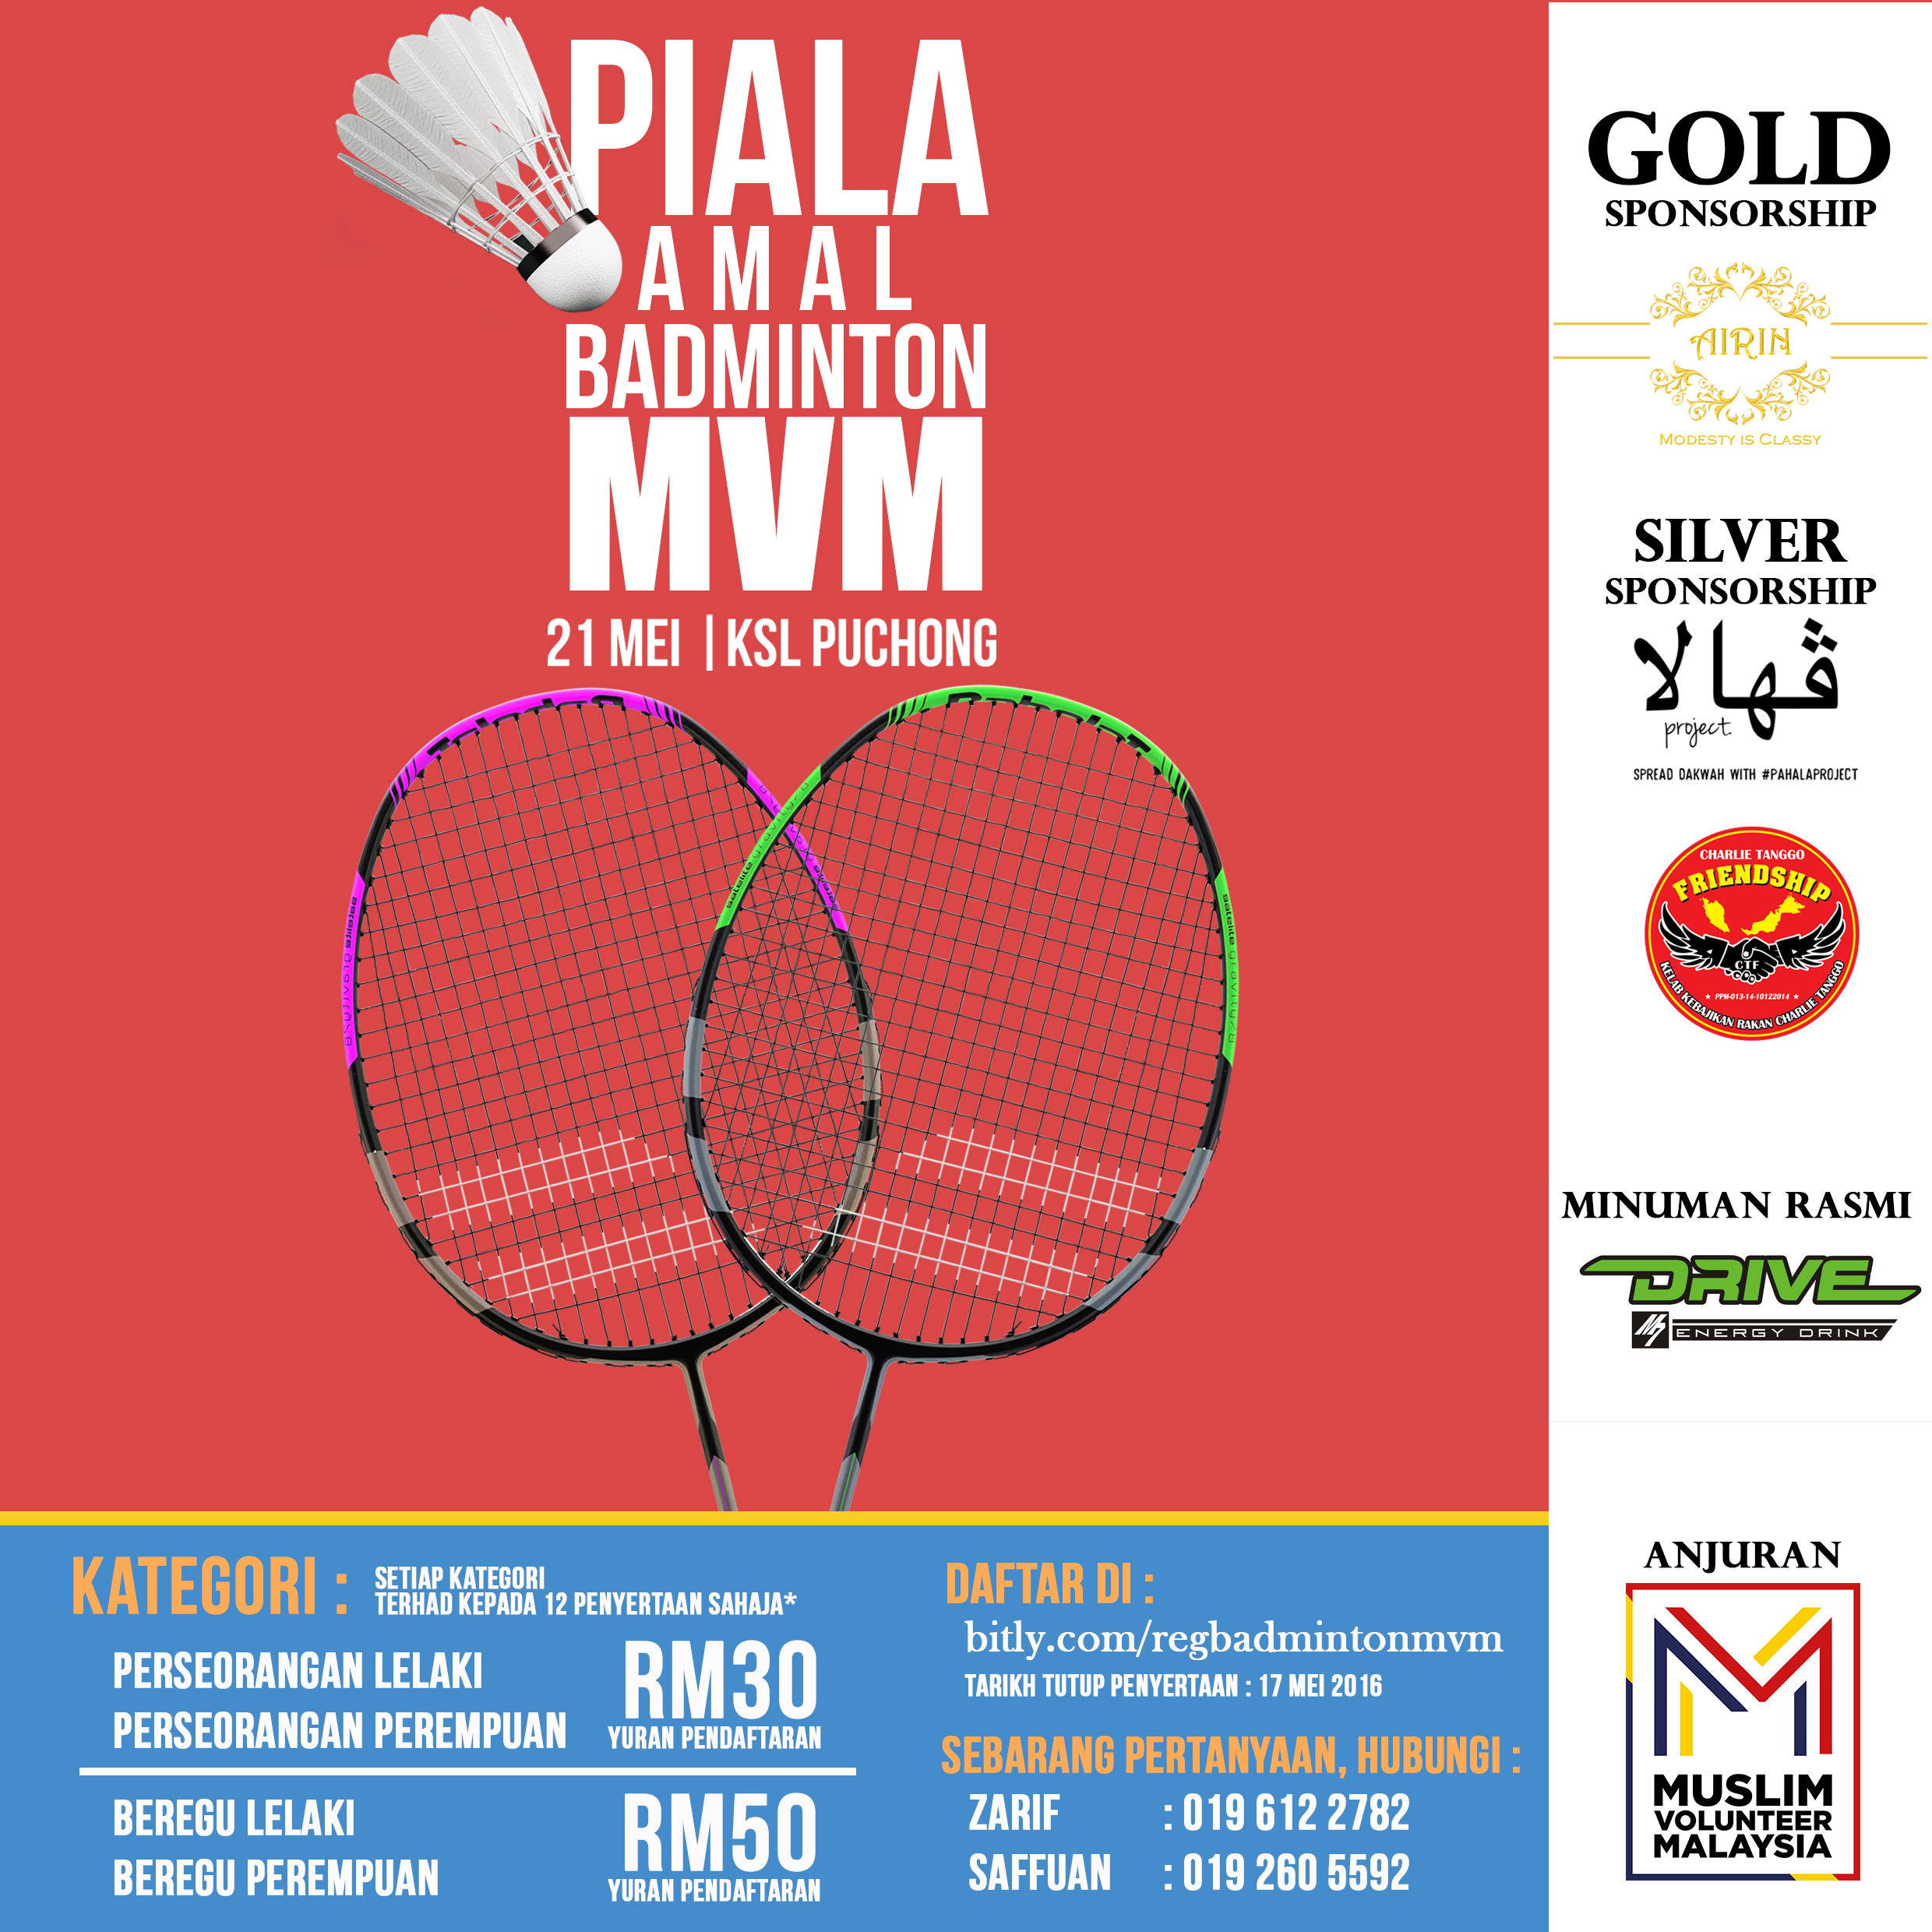 Piala Amal Badminton MVM